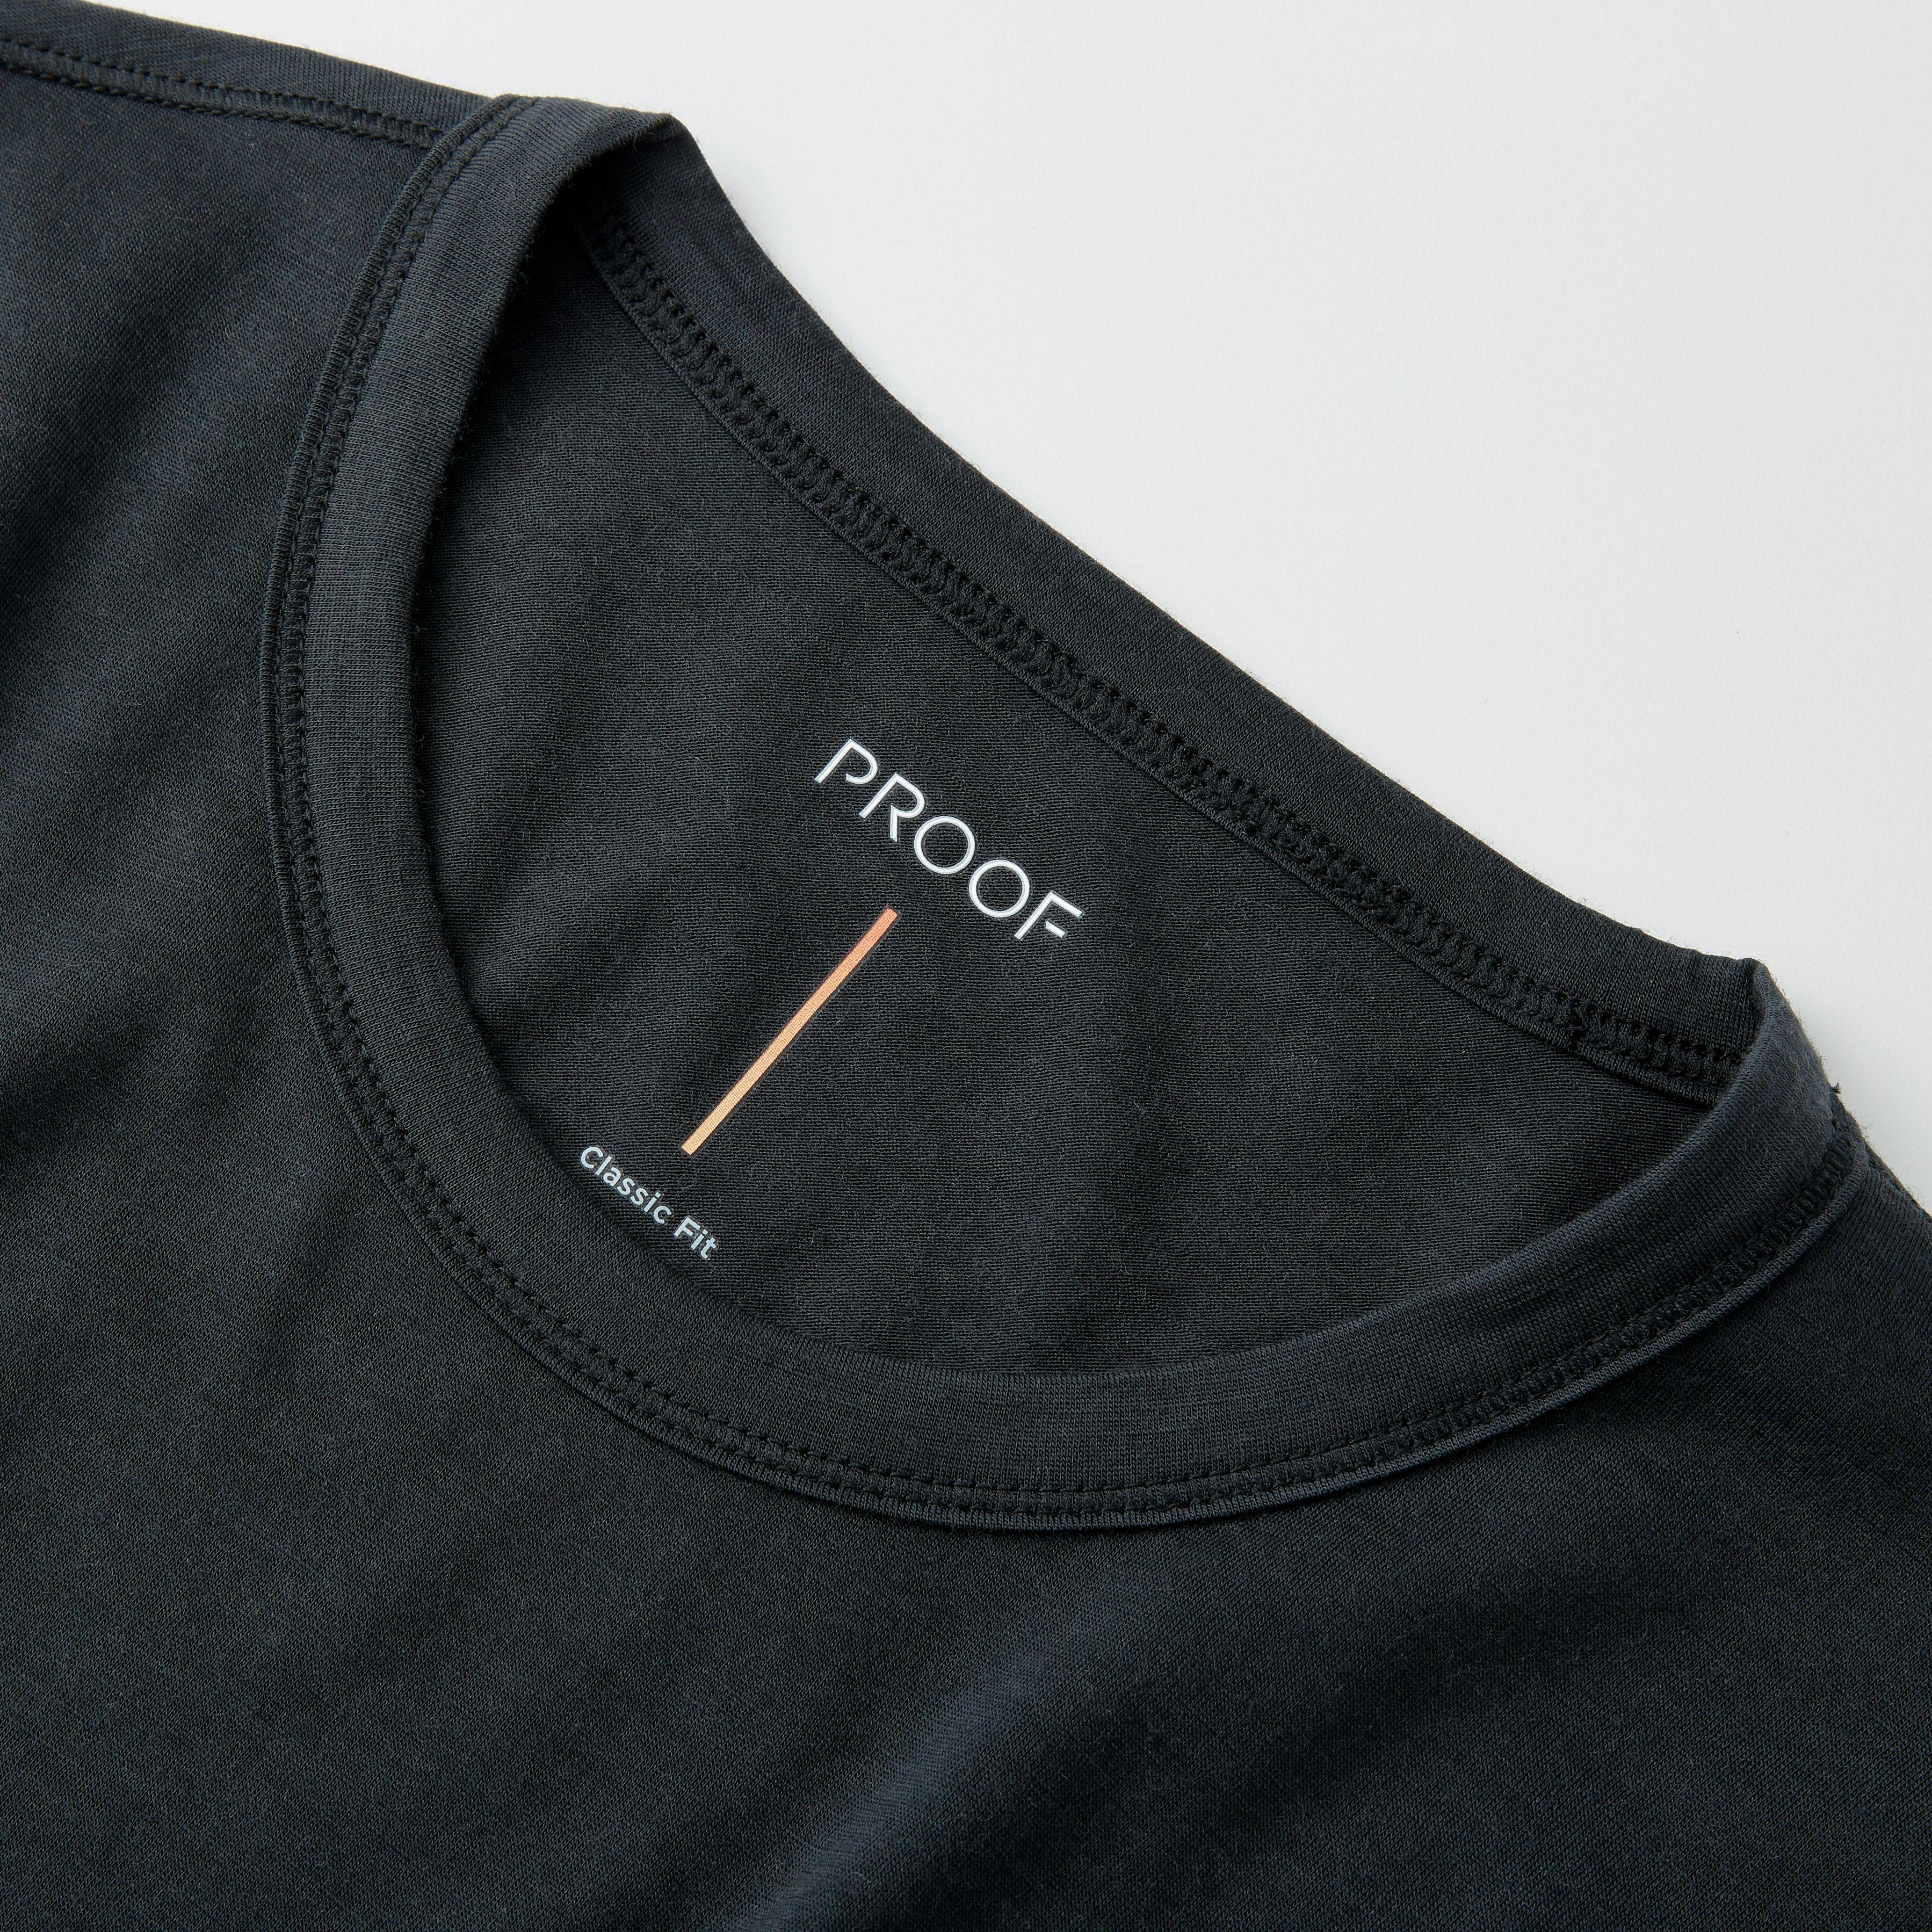 Proof 72-Hour Merino T-Shirt - Performance Fit (Original) - Stone Black, T- Shirts